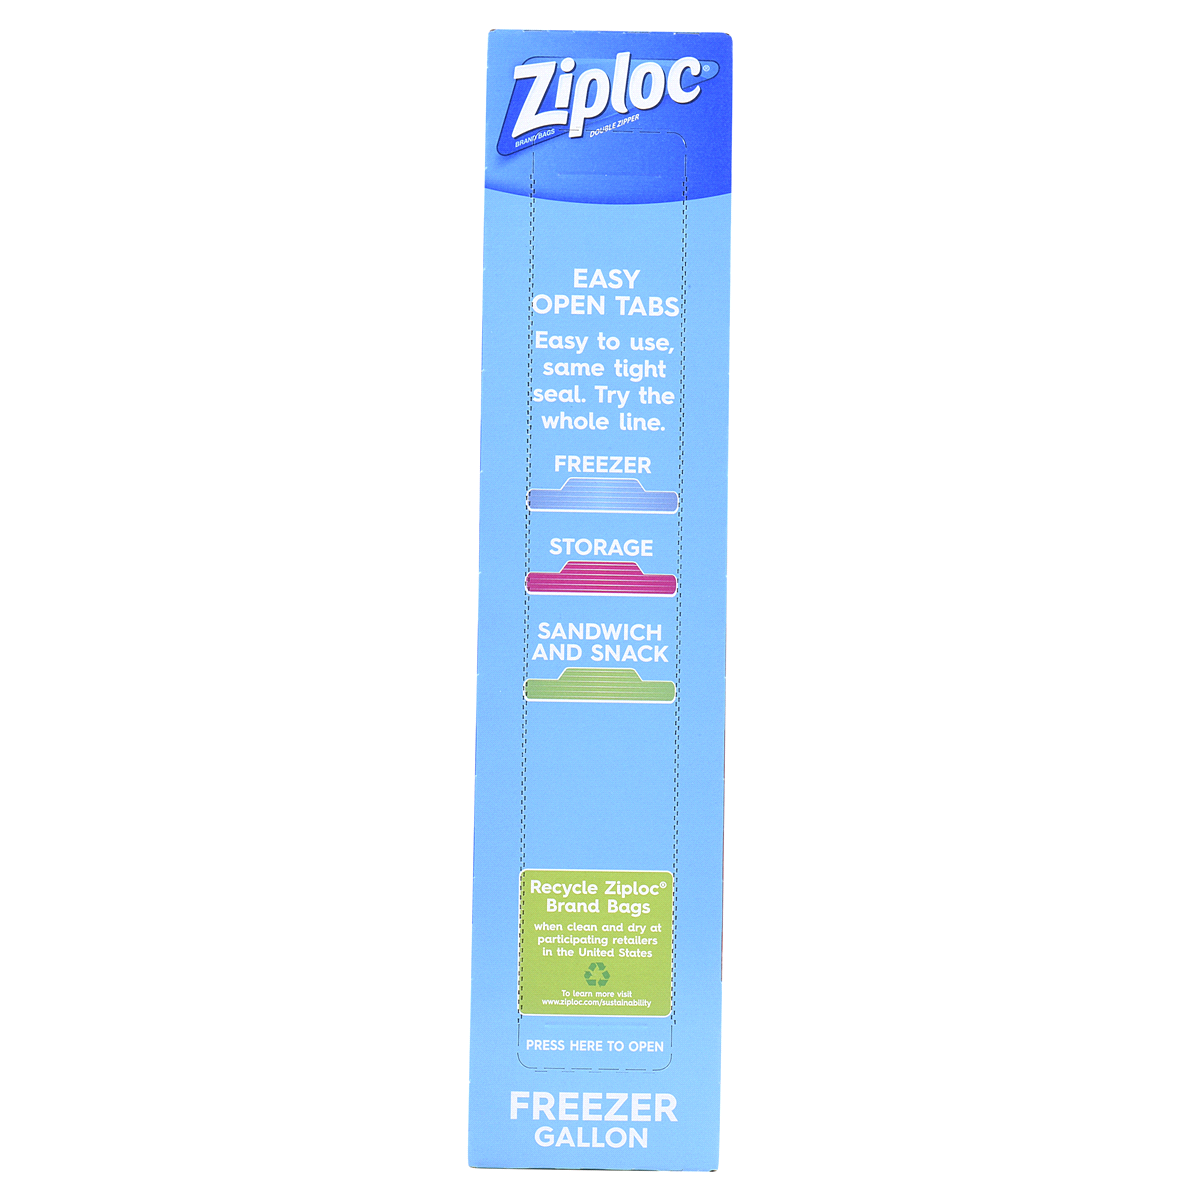 Ziploc Brand Freezer Bags with New Stay Open Design, Gallon, 14